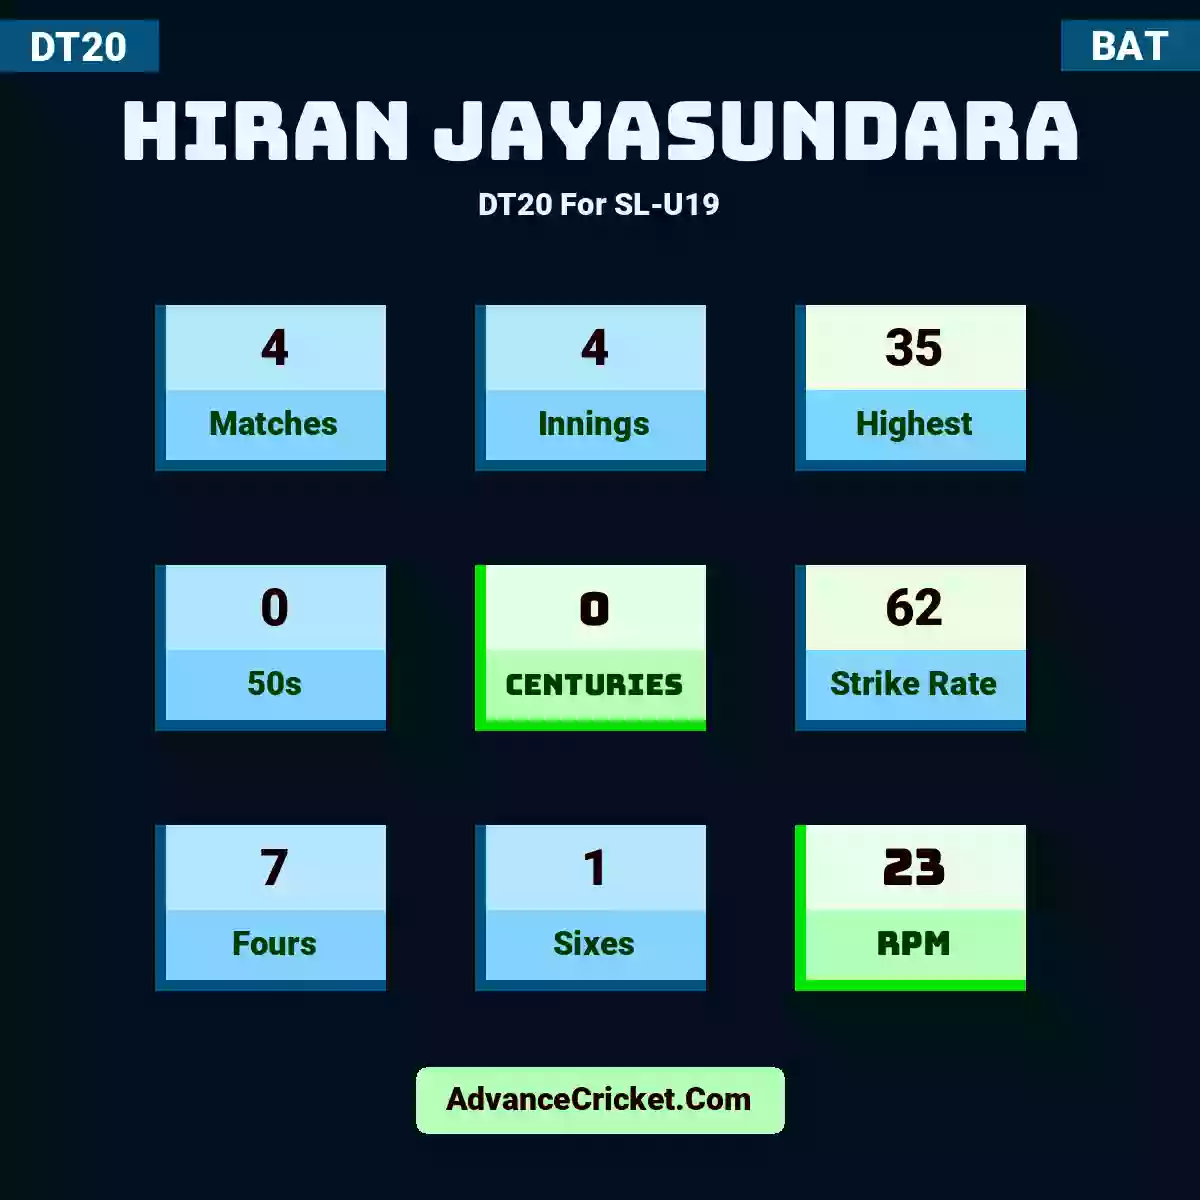 Hiran Jayasundara DT20  For SL-U19, Hiran Jayasundara played 4 matches, scored 35 runs as highest, 0 half-centuries, and 0 centuries, with a strike rate of 62. H.Jayasundara hit 7 fours and 1 sixes, with an RPM of 23.